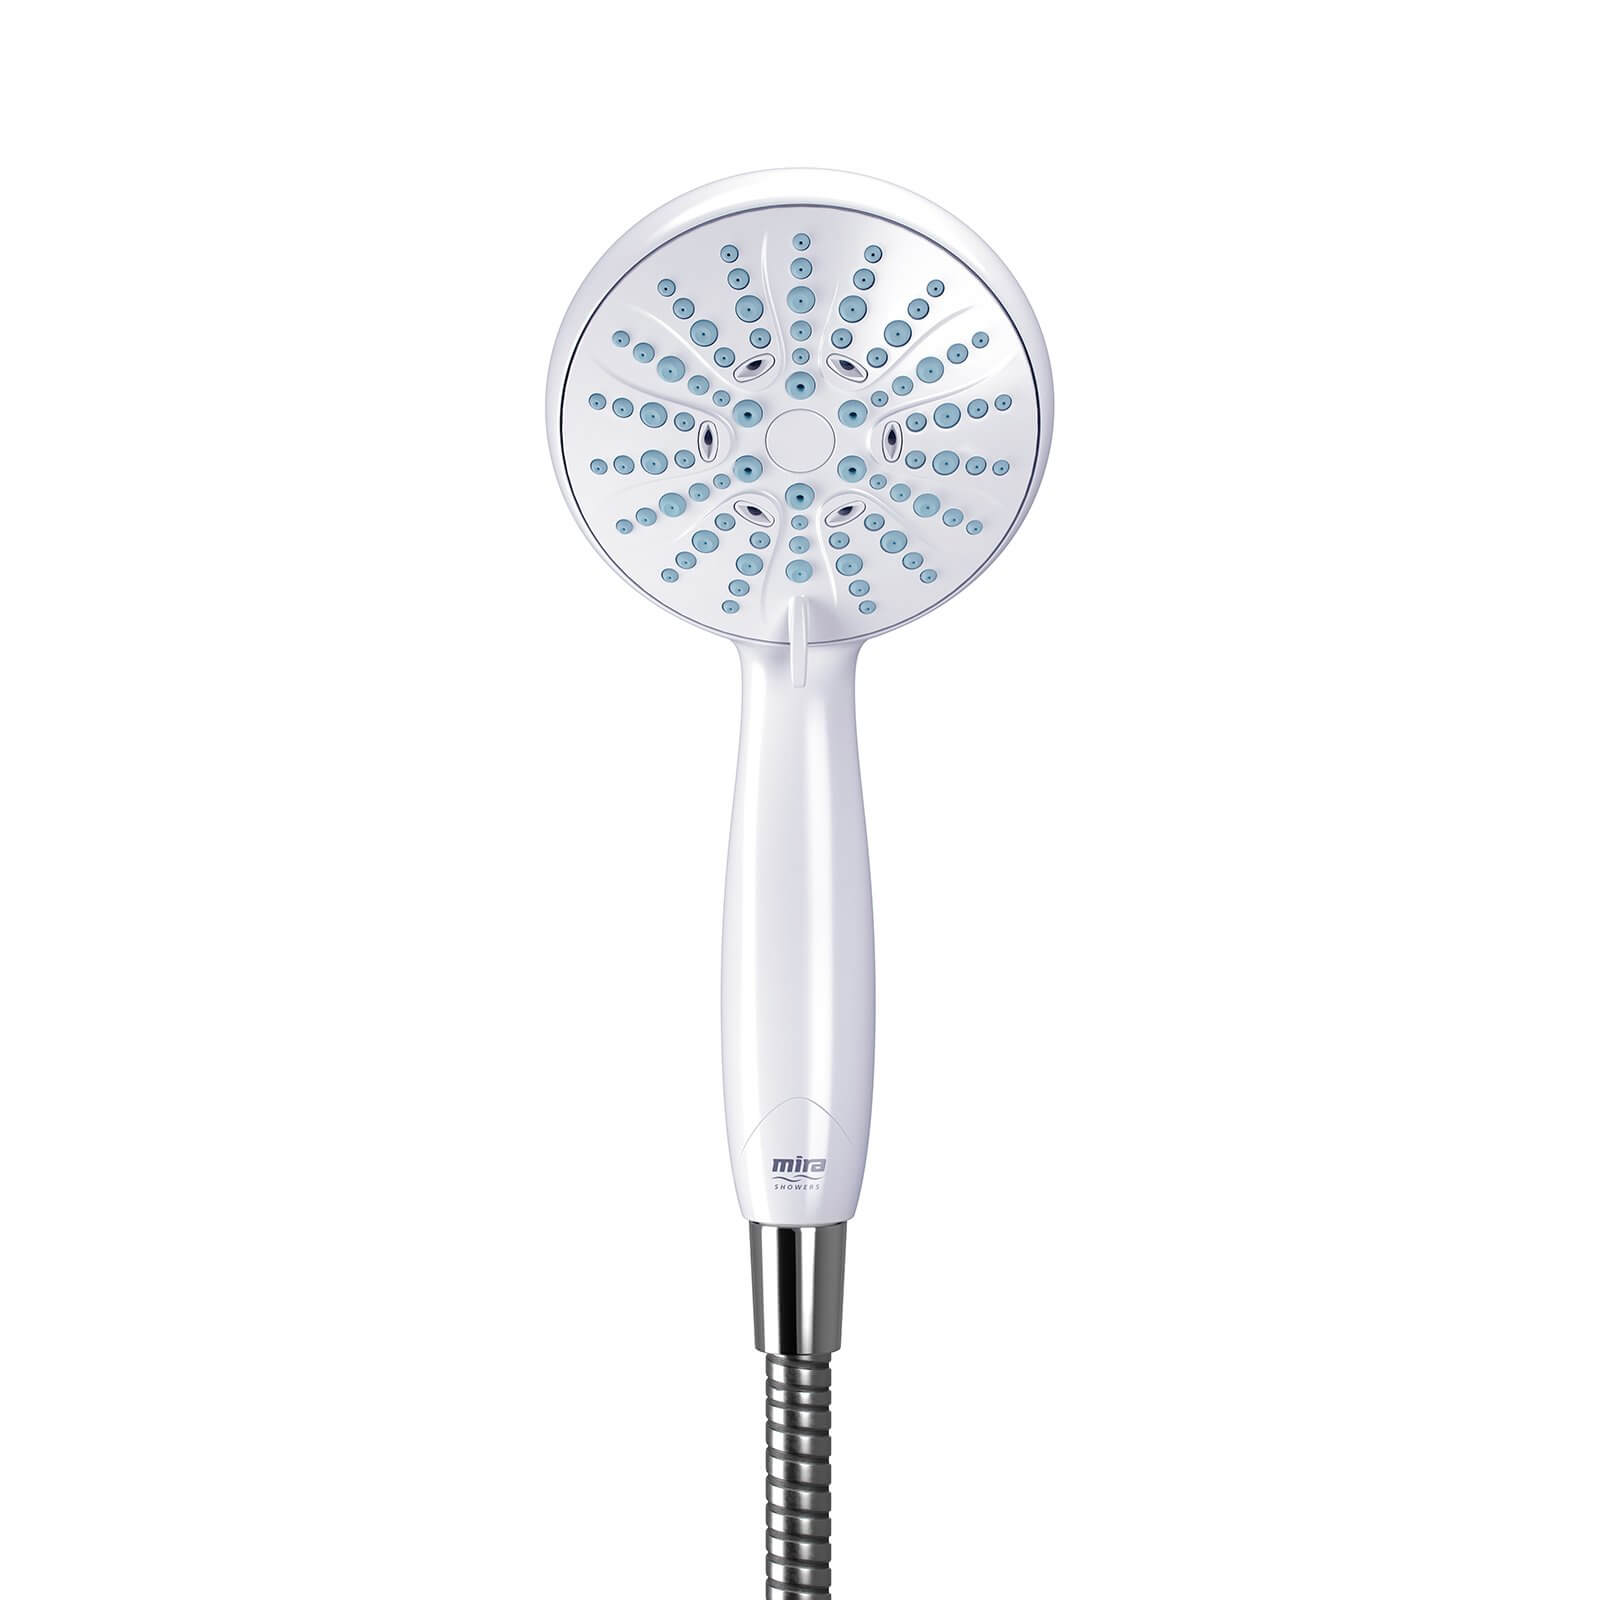 Mira Sprint 9.5kW Electric Shower - White